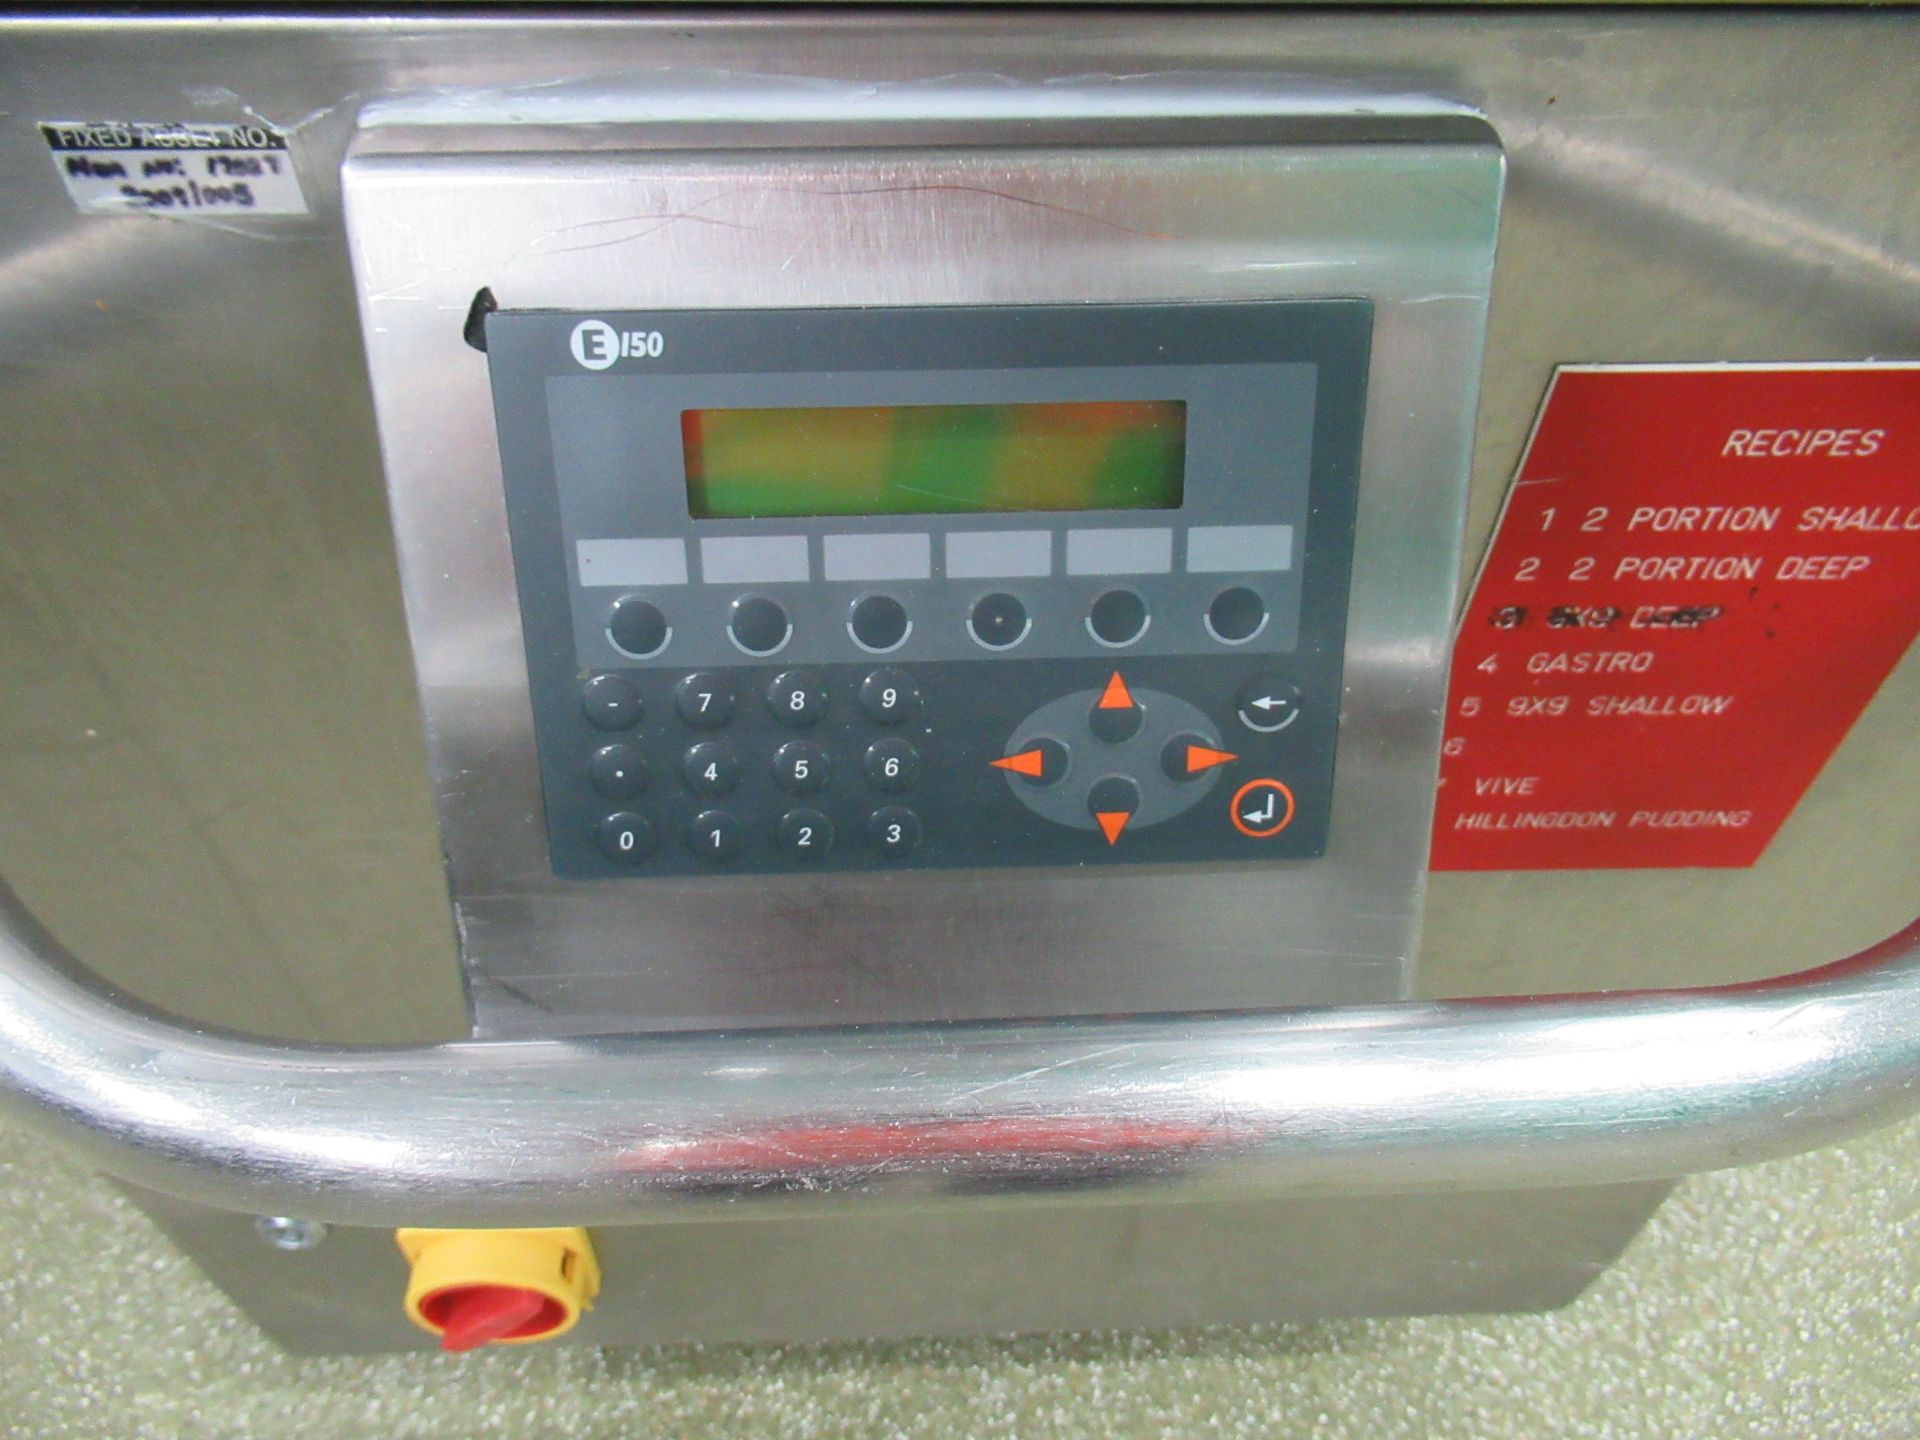 Turbo Systems tray denester. Serial no: FP1005903001 (2009) 2 row feeder with E150 keypad (Part of - Image 3 of 10